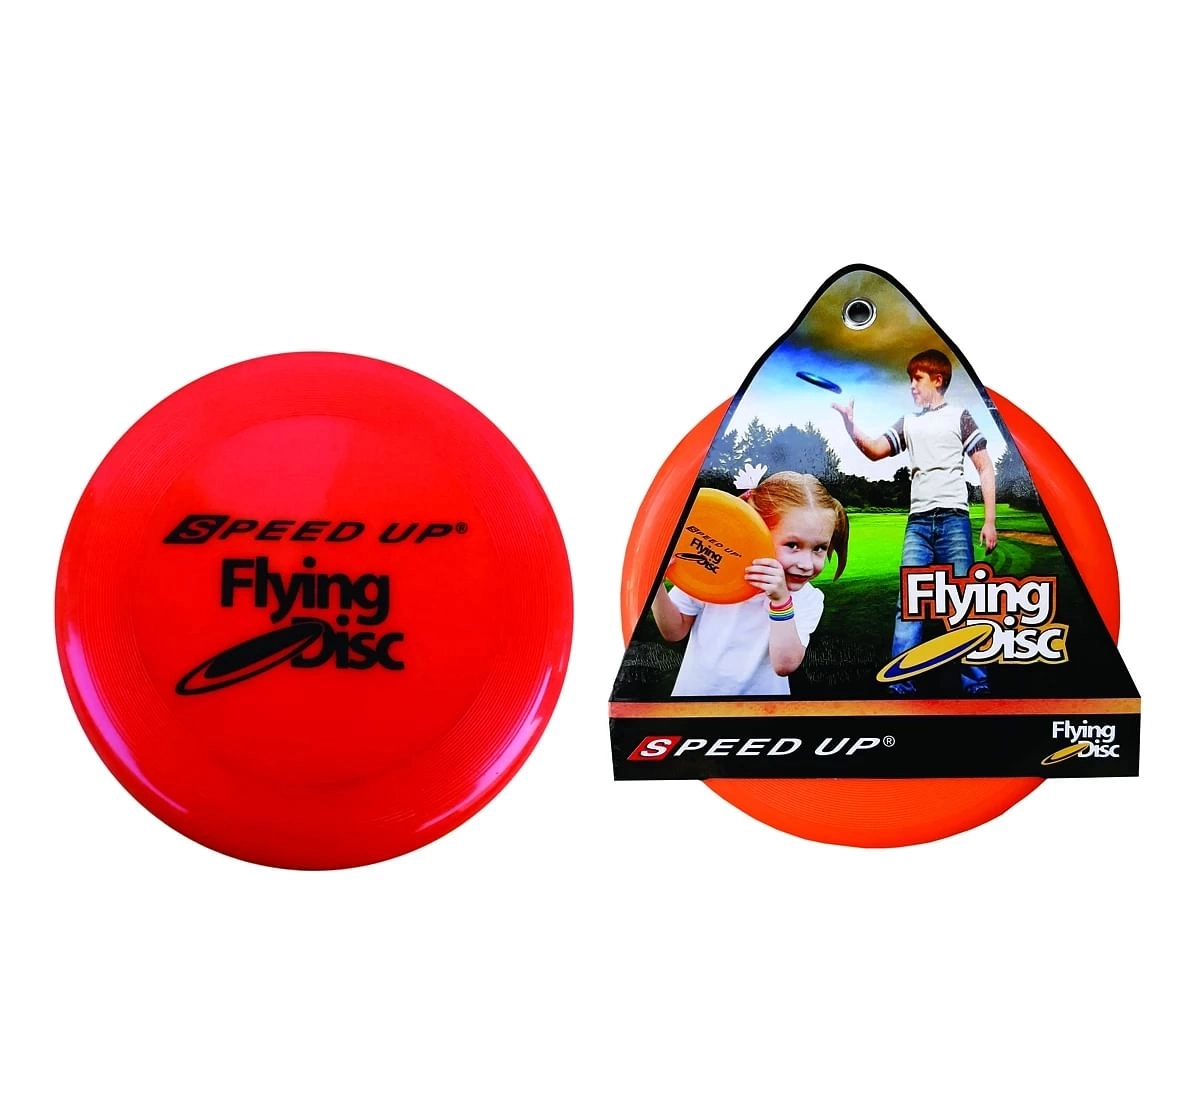 1625 Frisbee/Flying Disc Disk Multicolour 8Y+